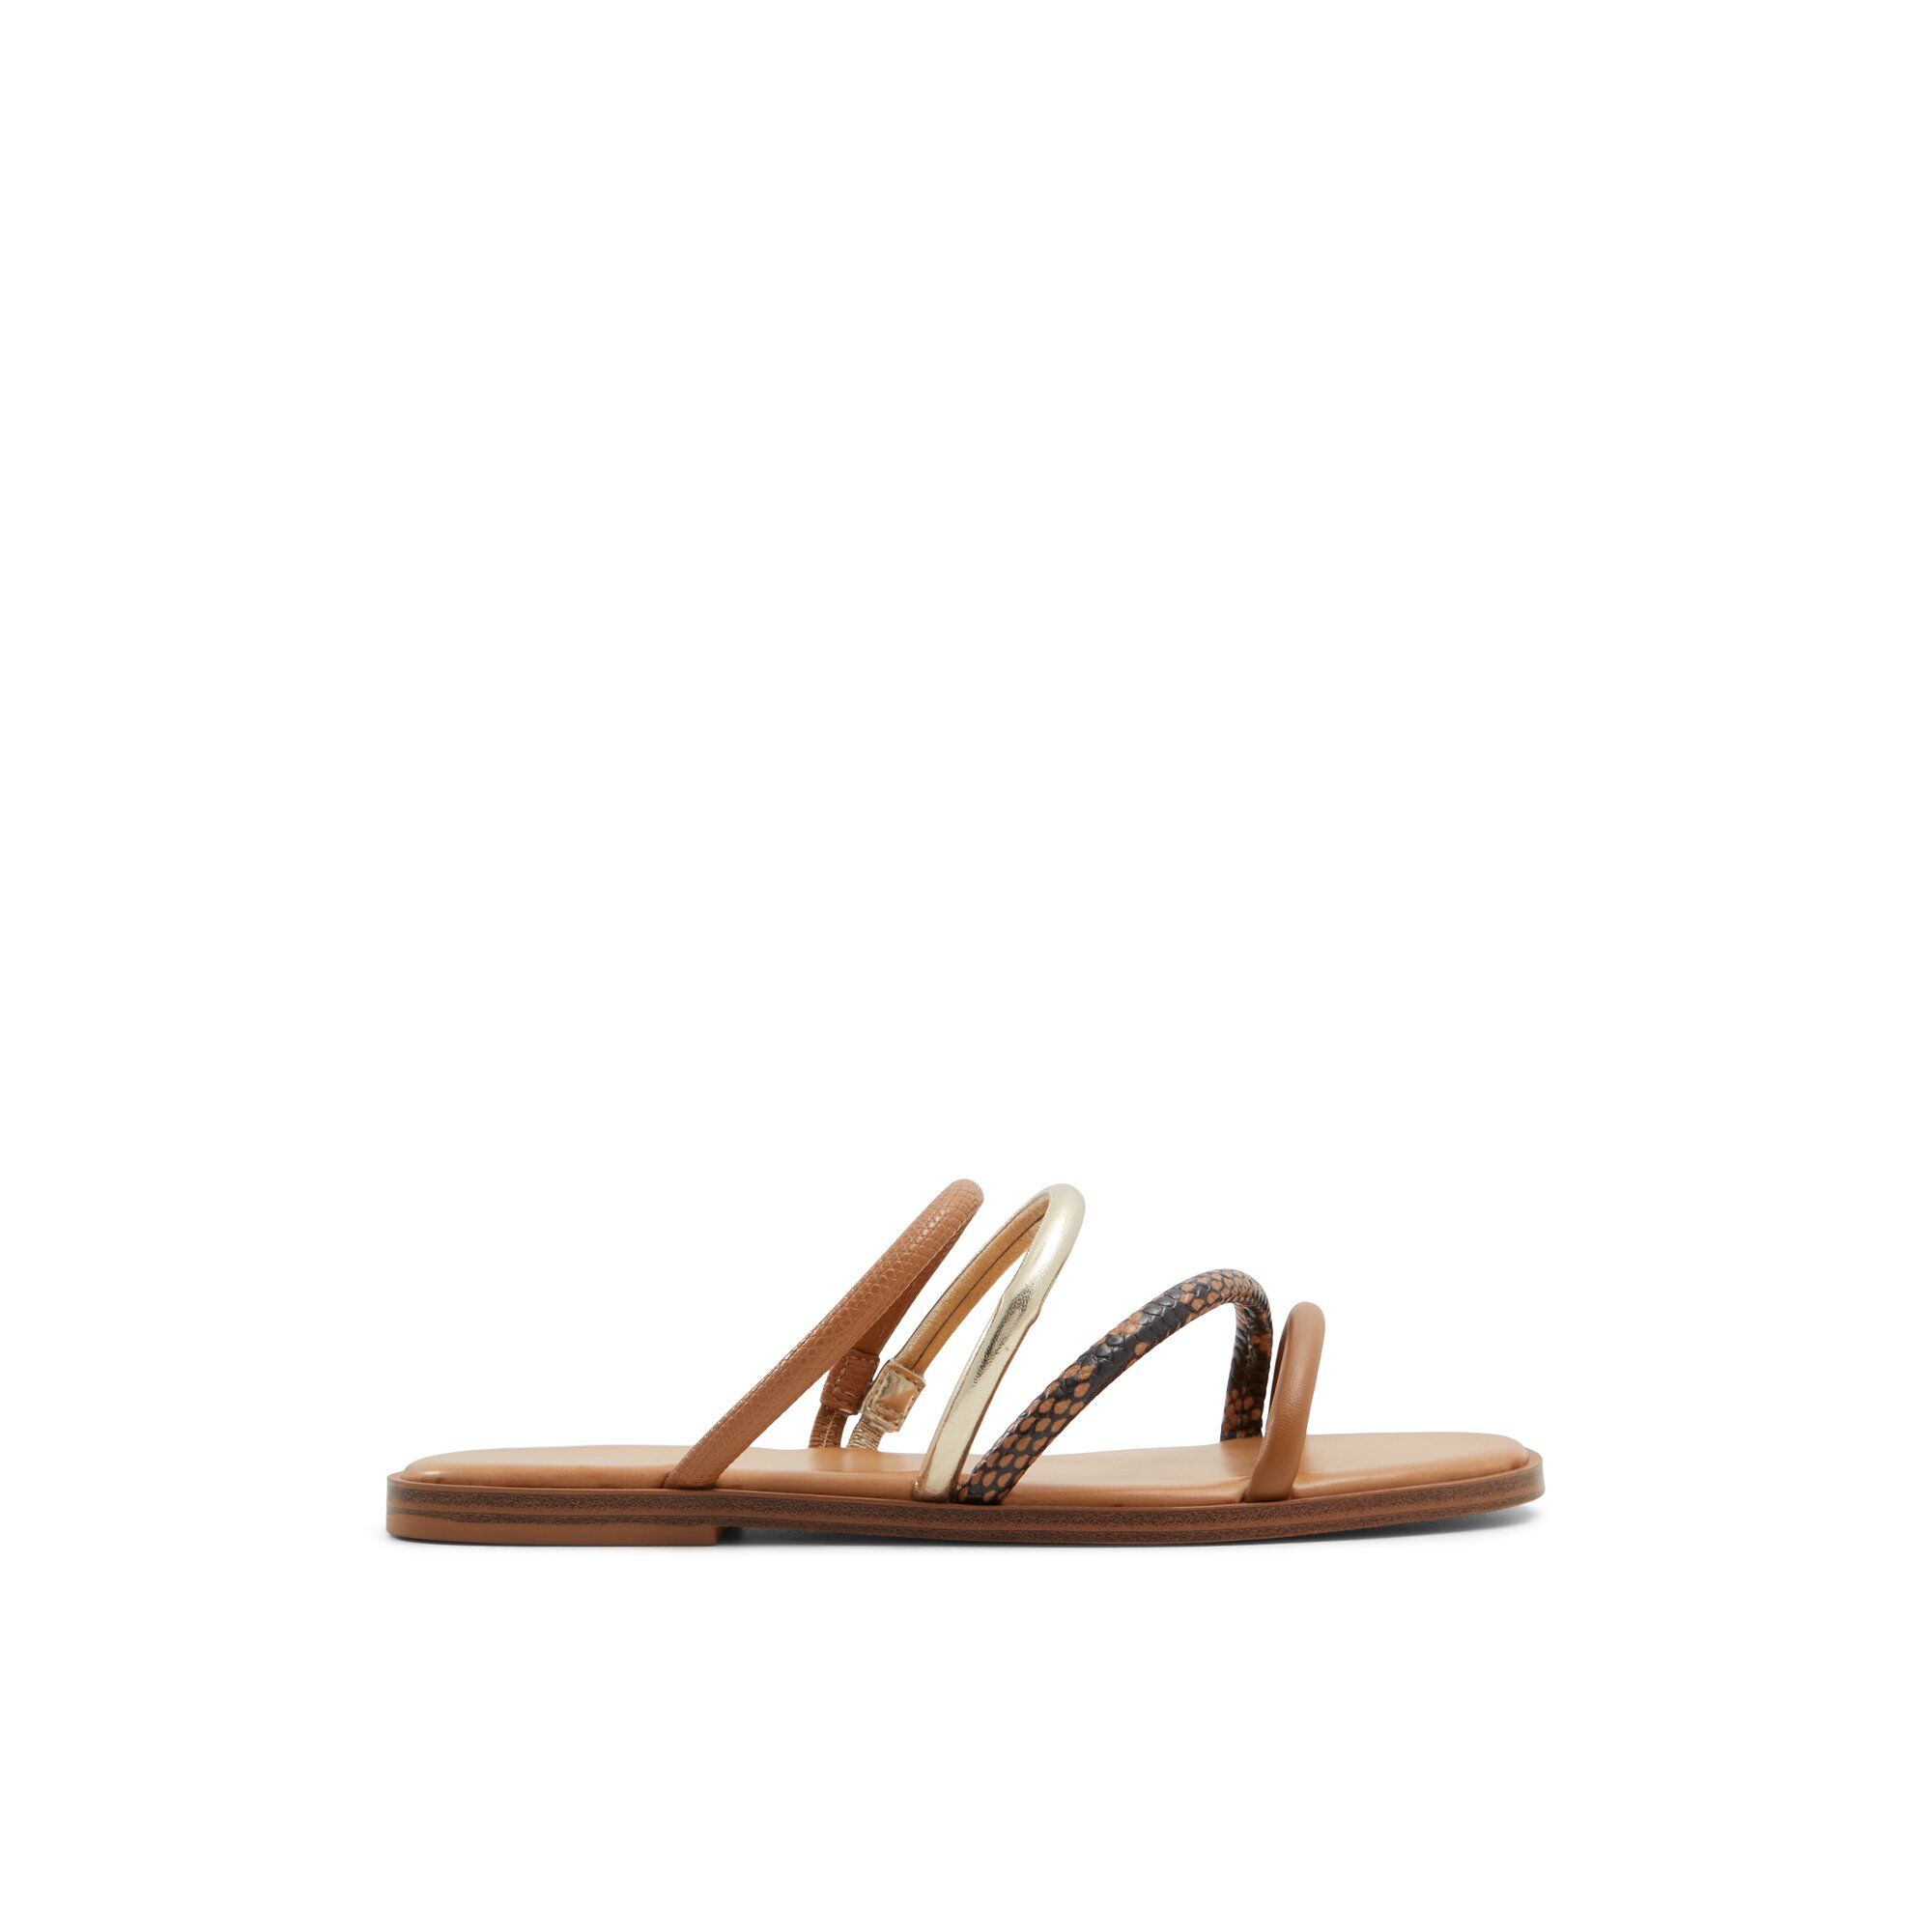 ALDO Stila - Women's Flat Sandals - Brown, Size 11